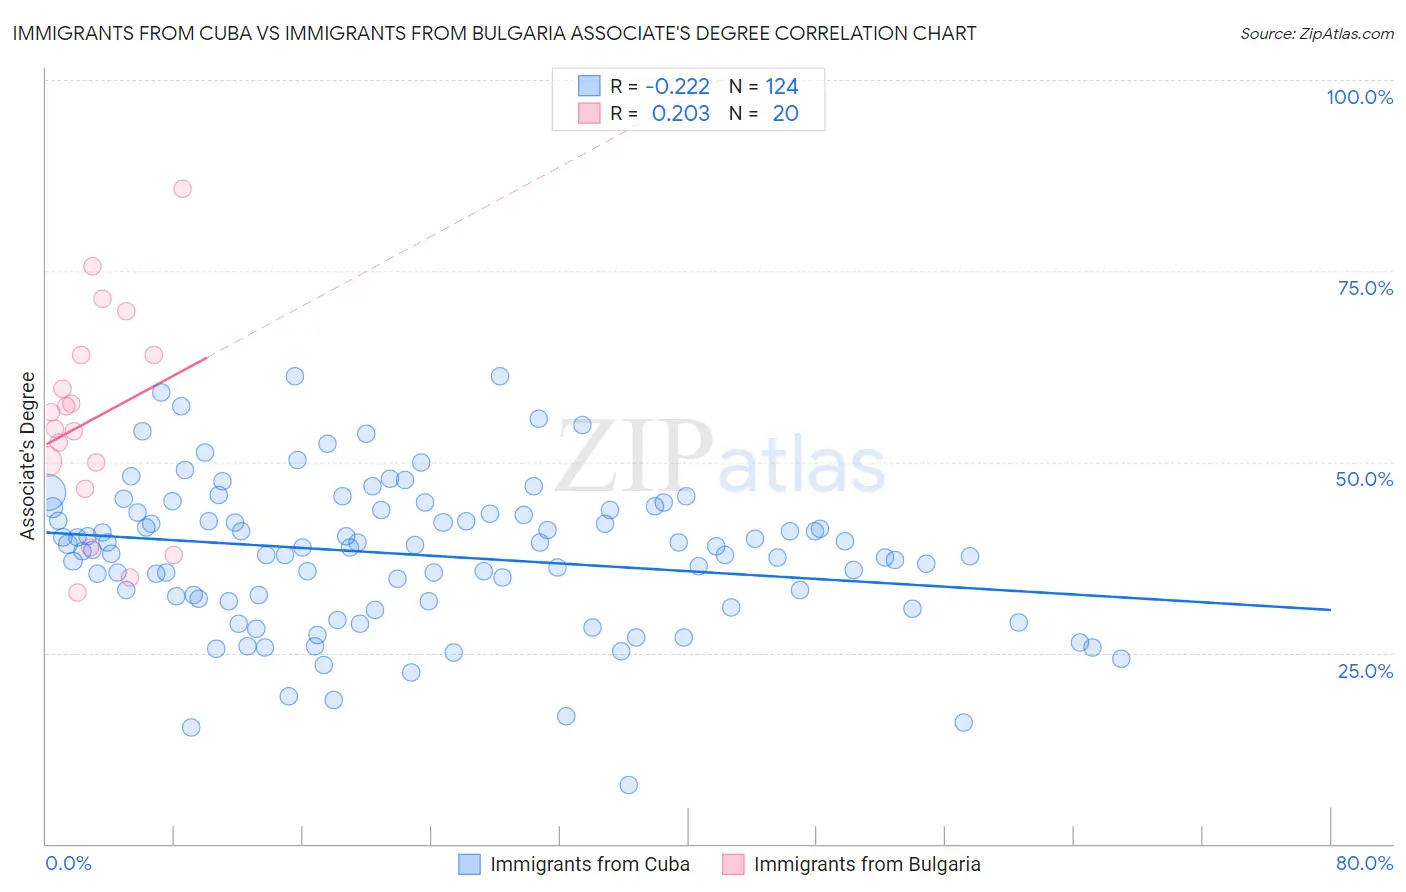 Immigrants from Cuba vs Immigrants from Bulgaria Associate's Degree